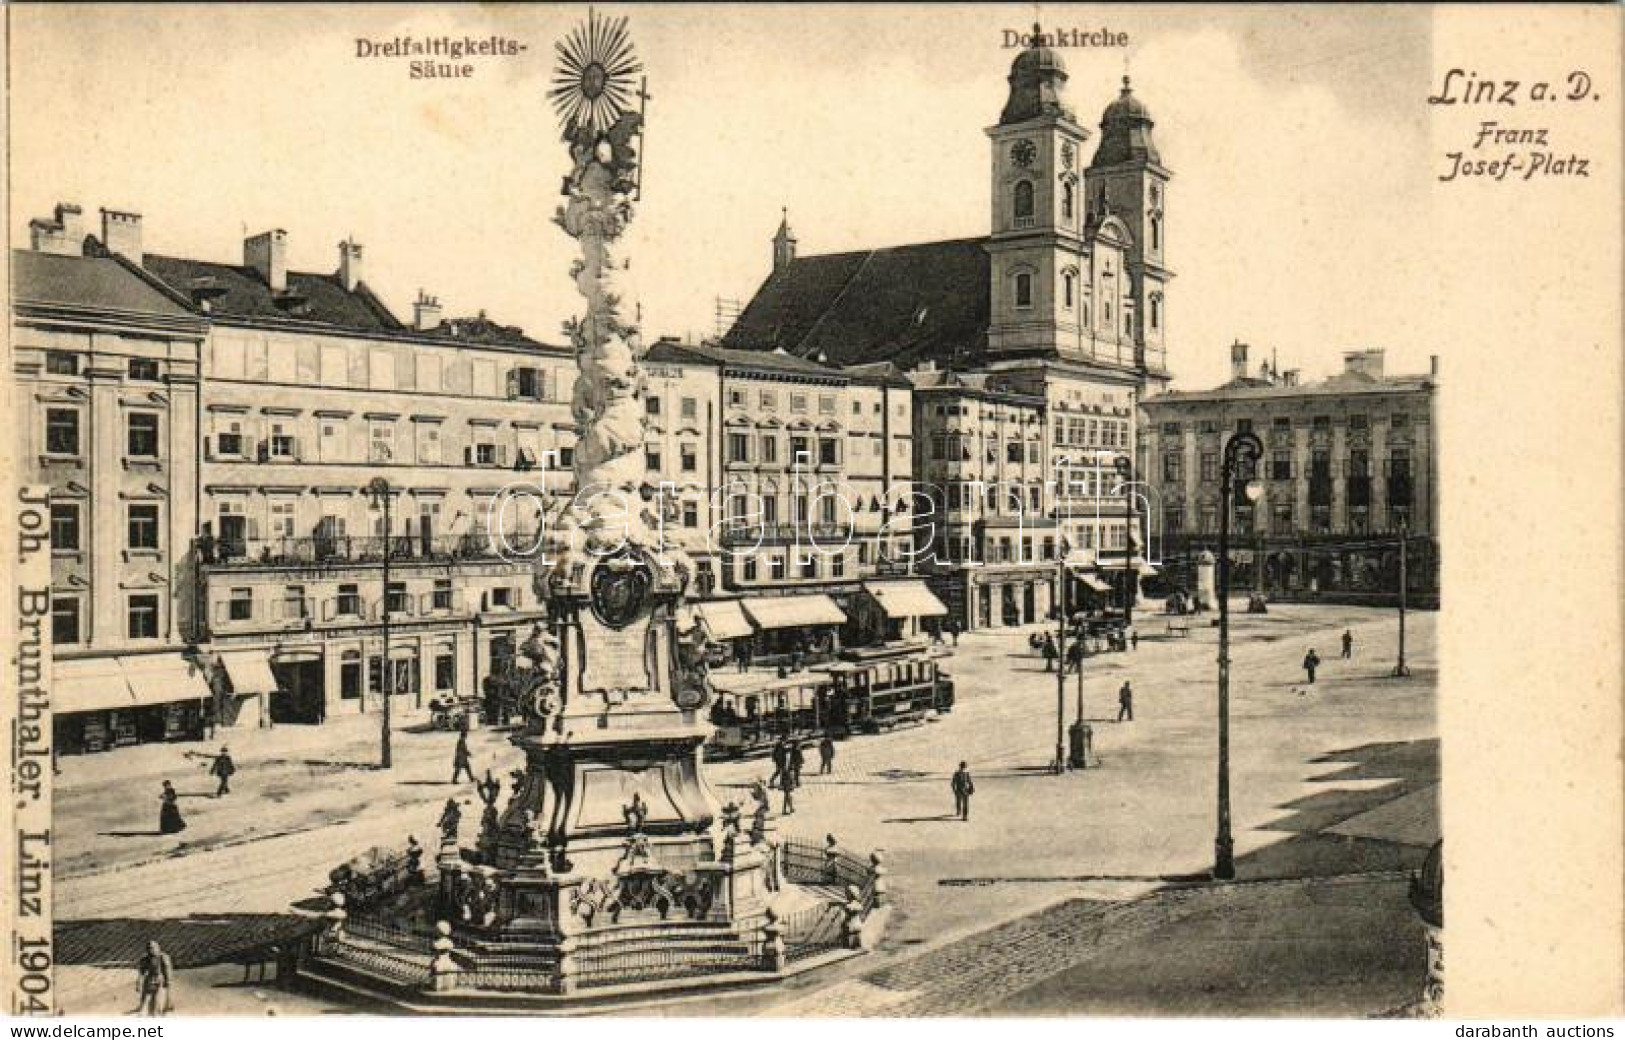 ** T2 Linz, Franz Josef-Platz, Dreifaltigkeits-Säule, Domkirche / Square, Holy Trinity Statue, Church, Tram, Shops / Fer - Unclassified